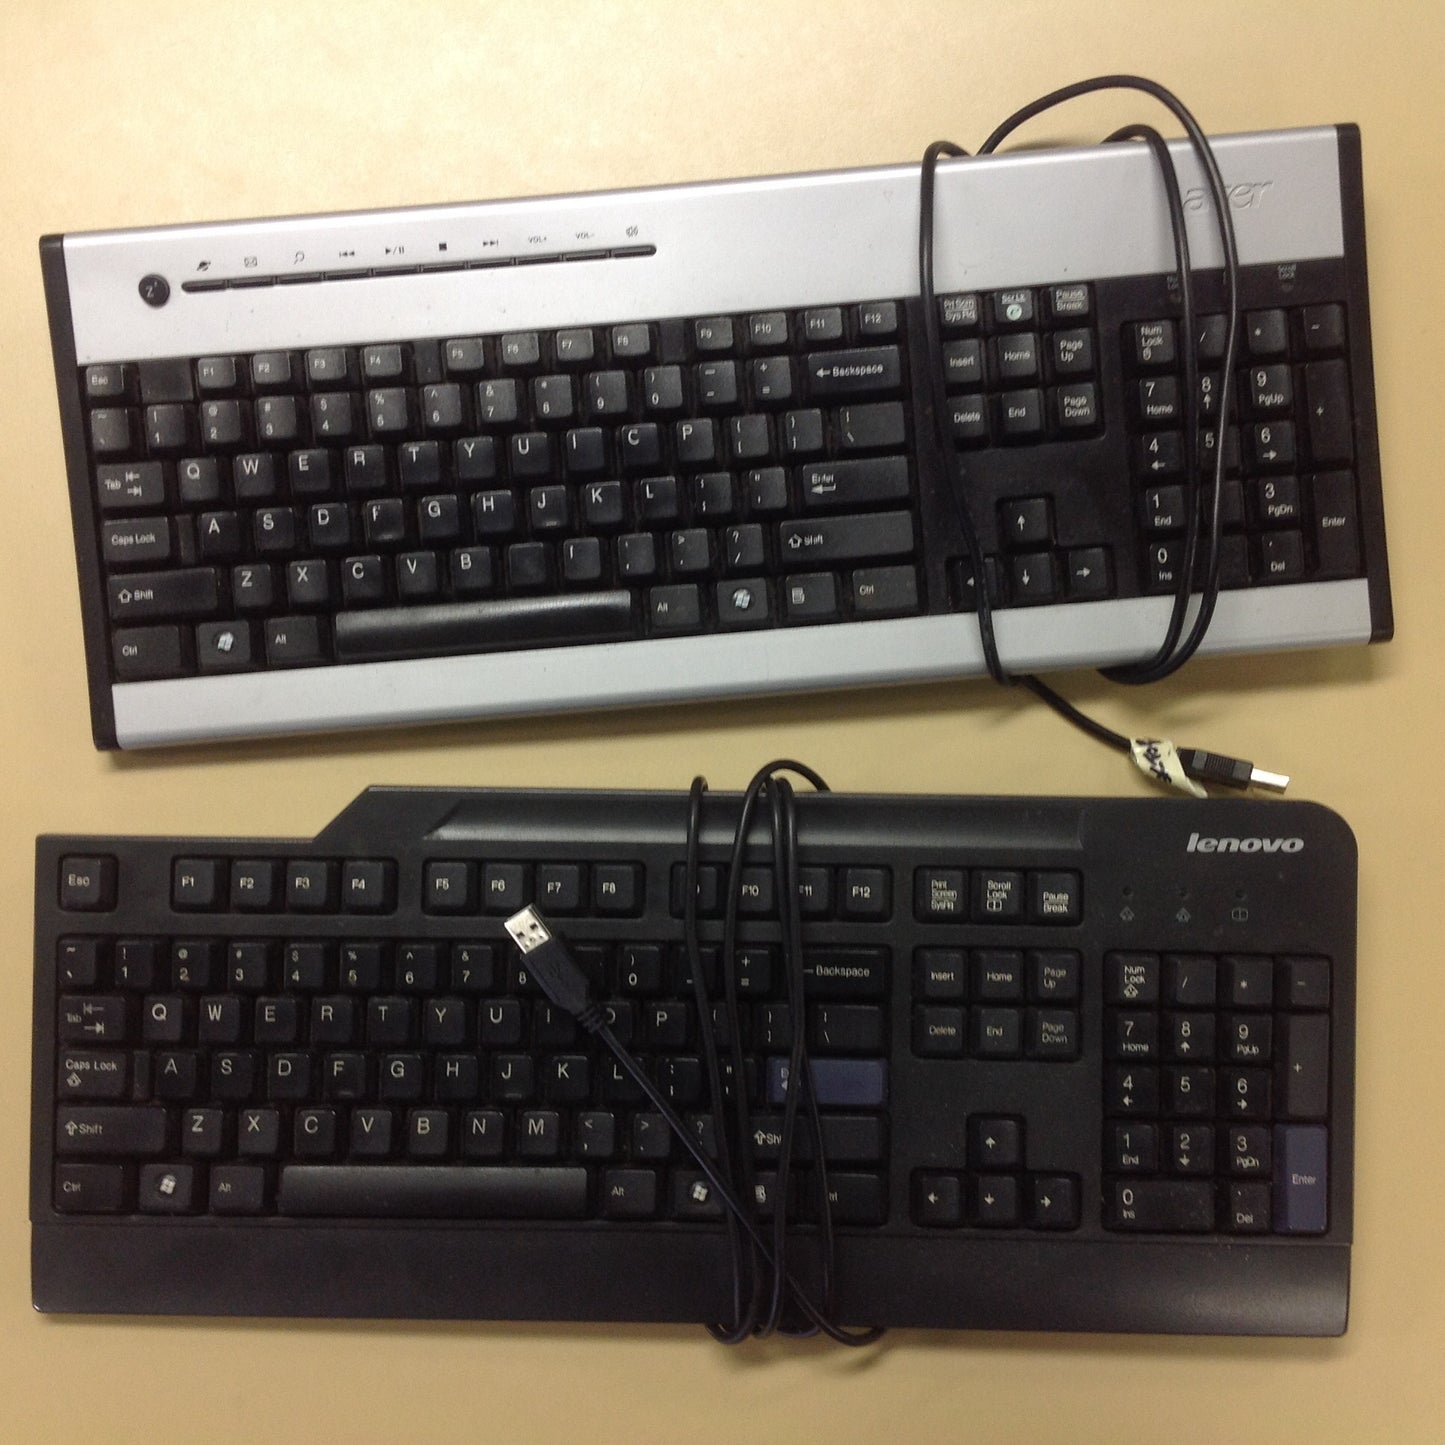 Wired Keyboard